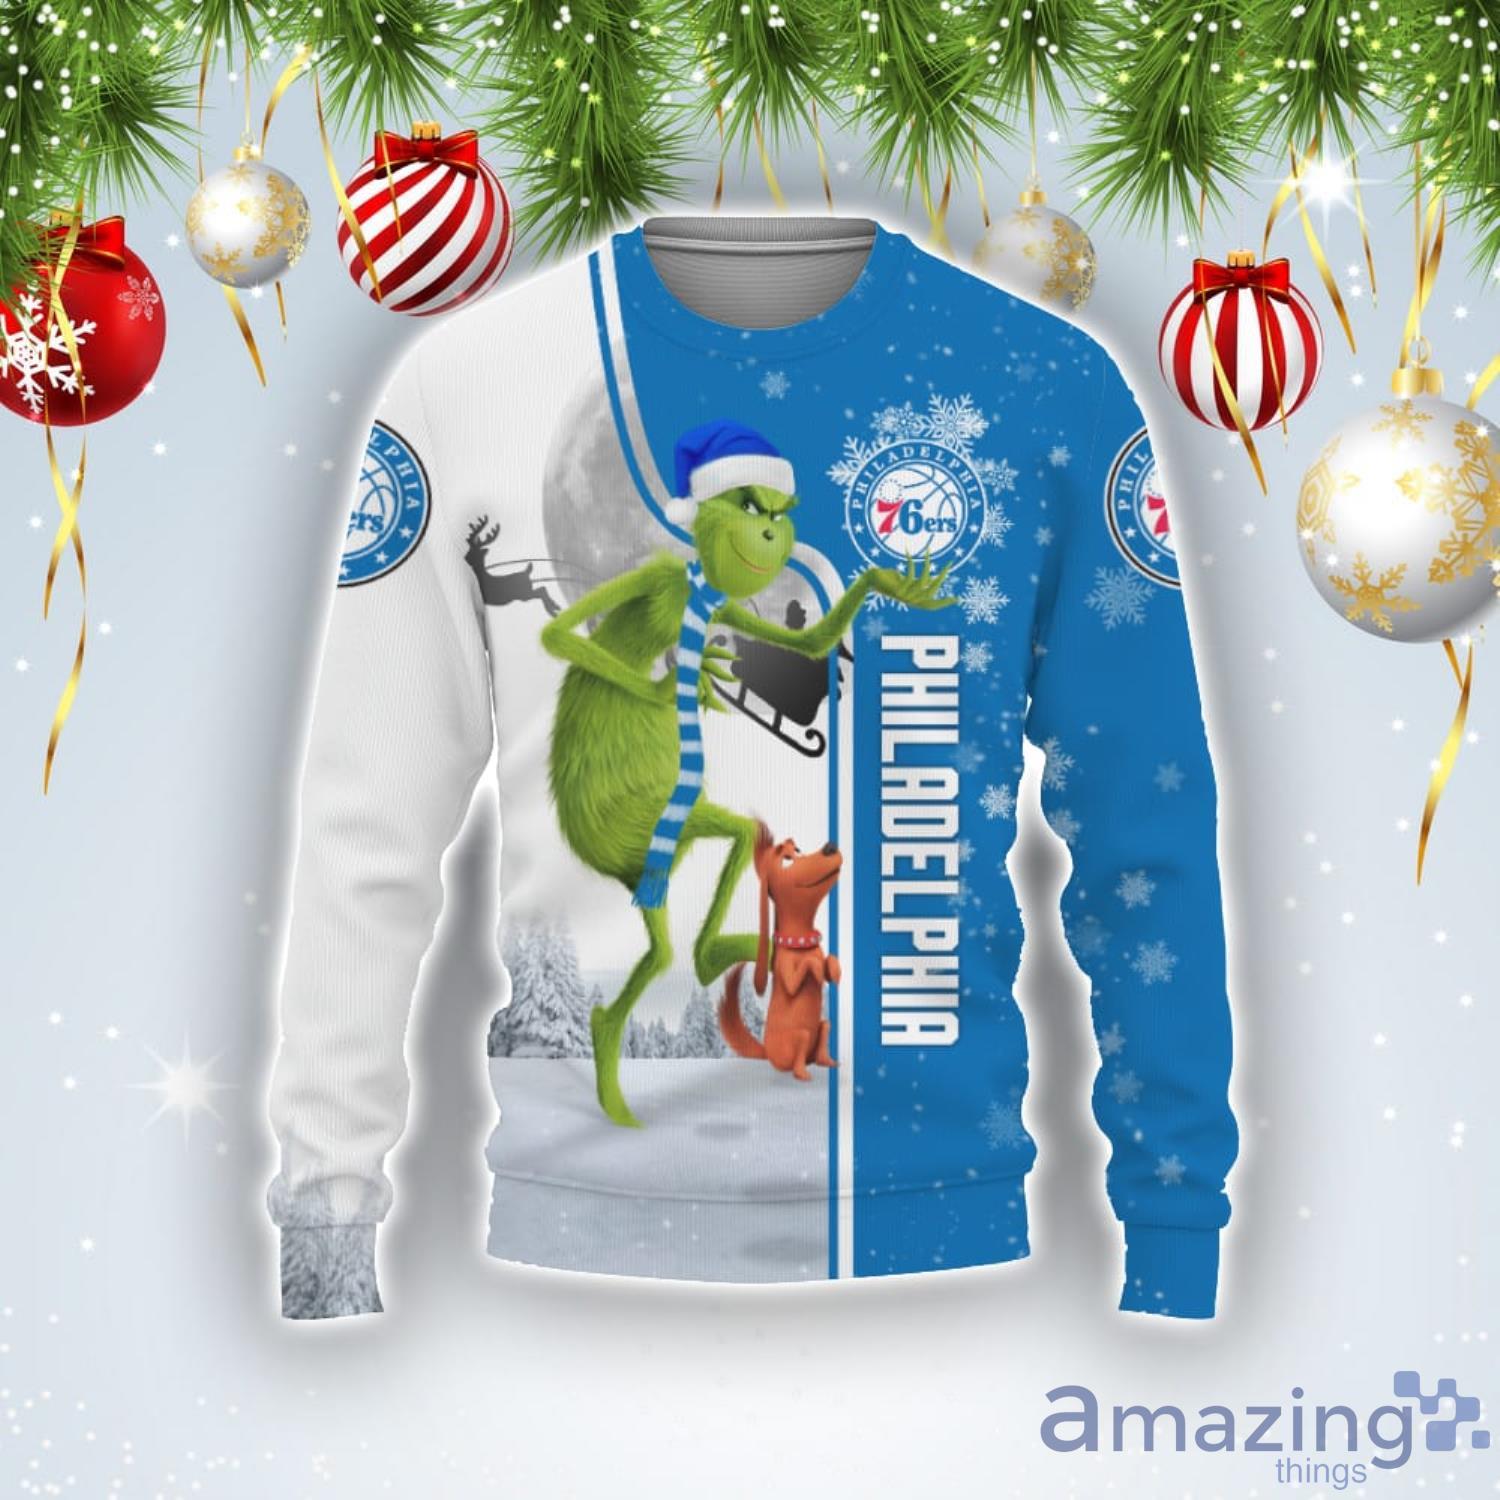 Philadelphia 76ers Ugly Sweaters, 76ers Ugly Christmas Sweater